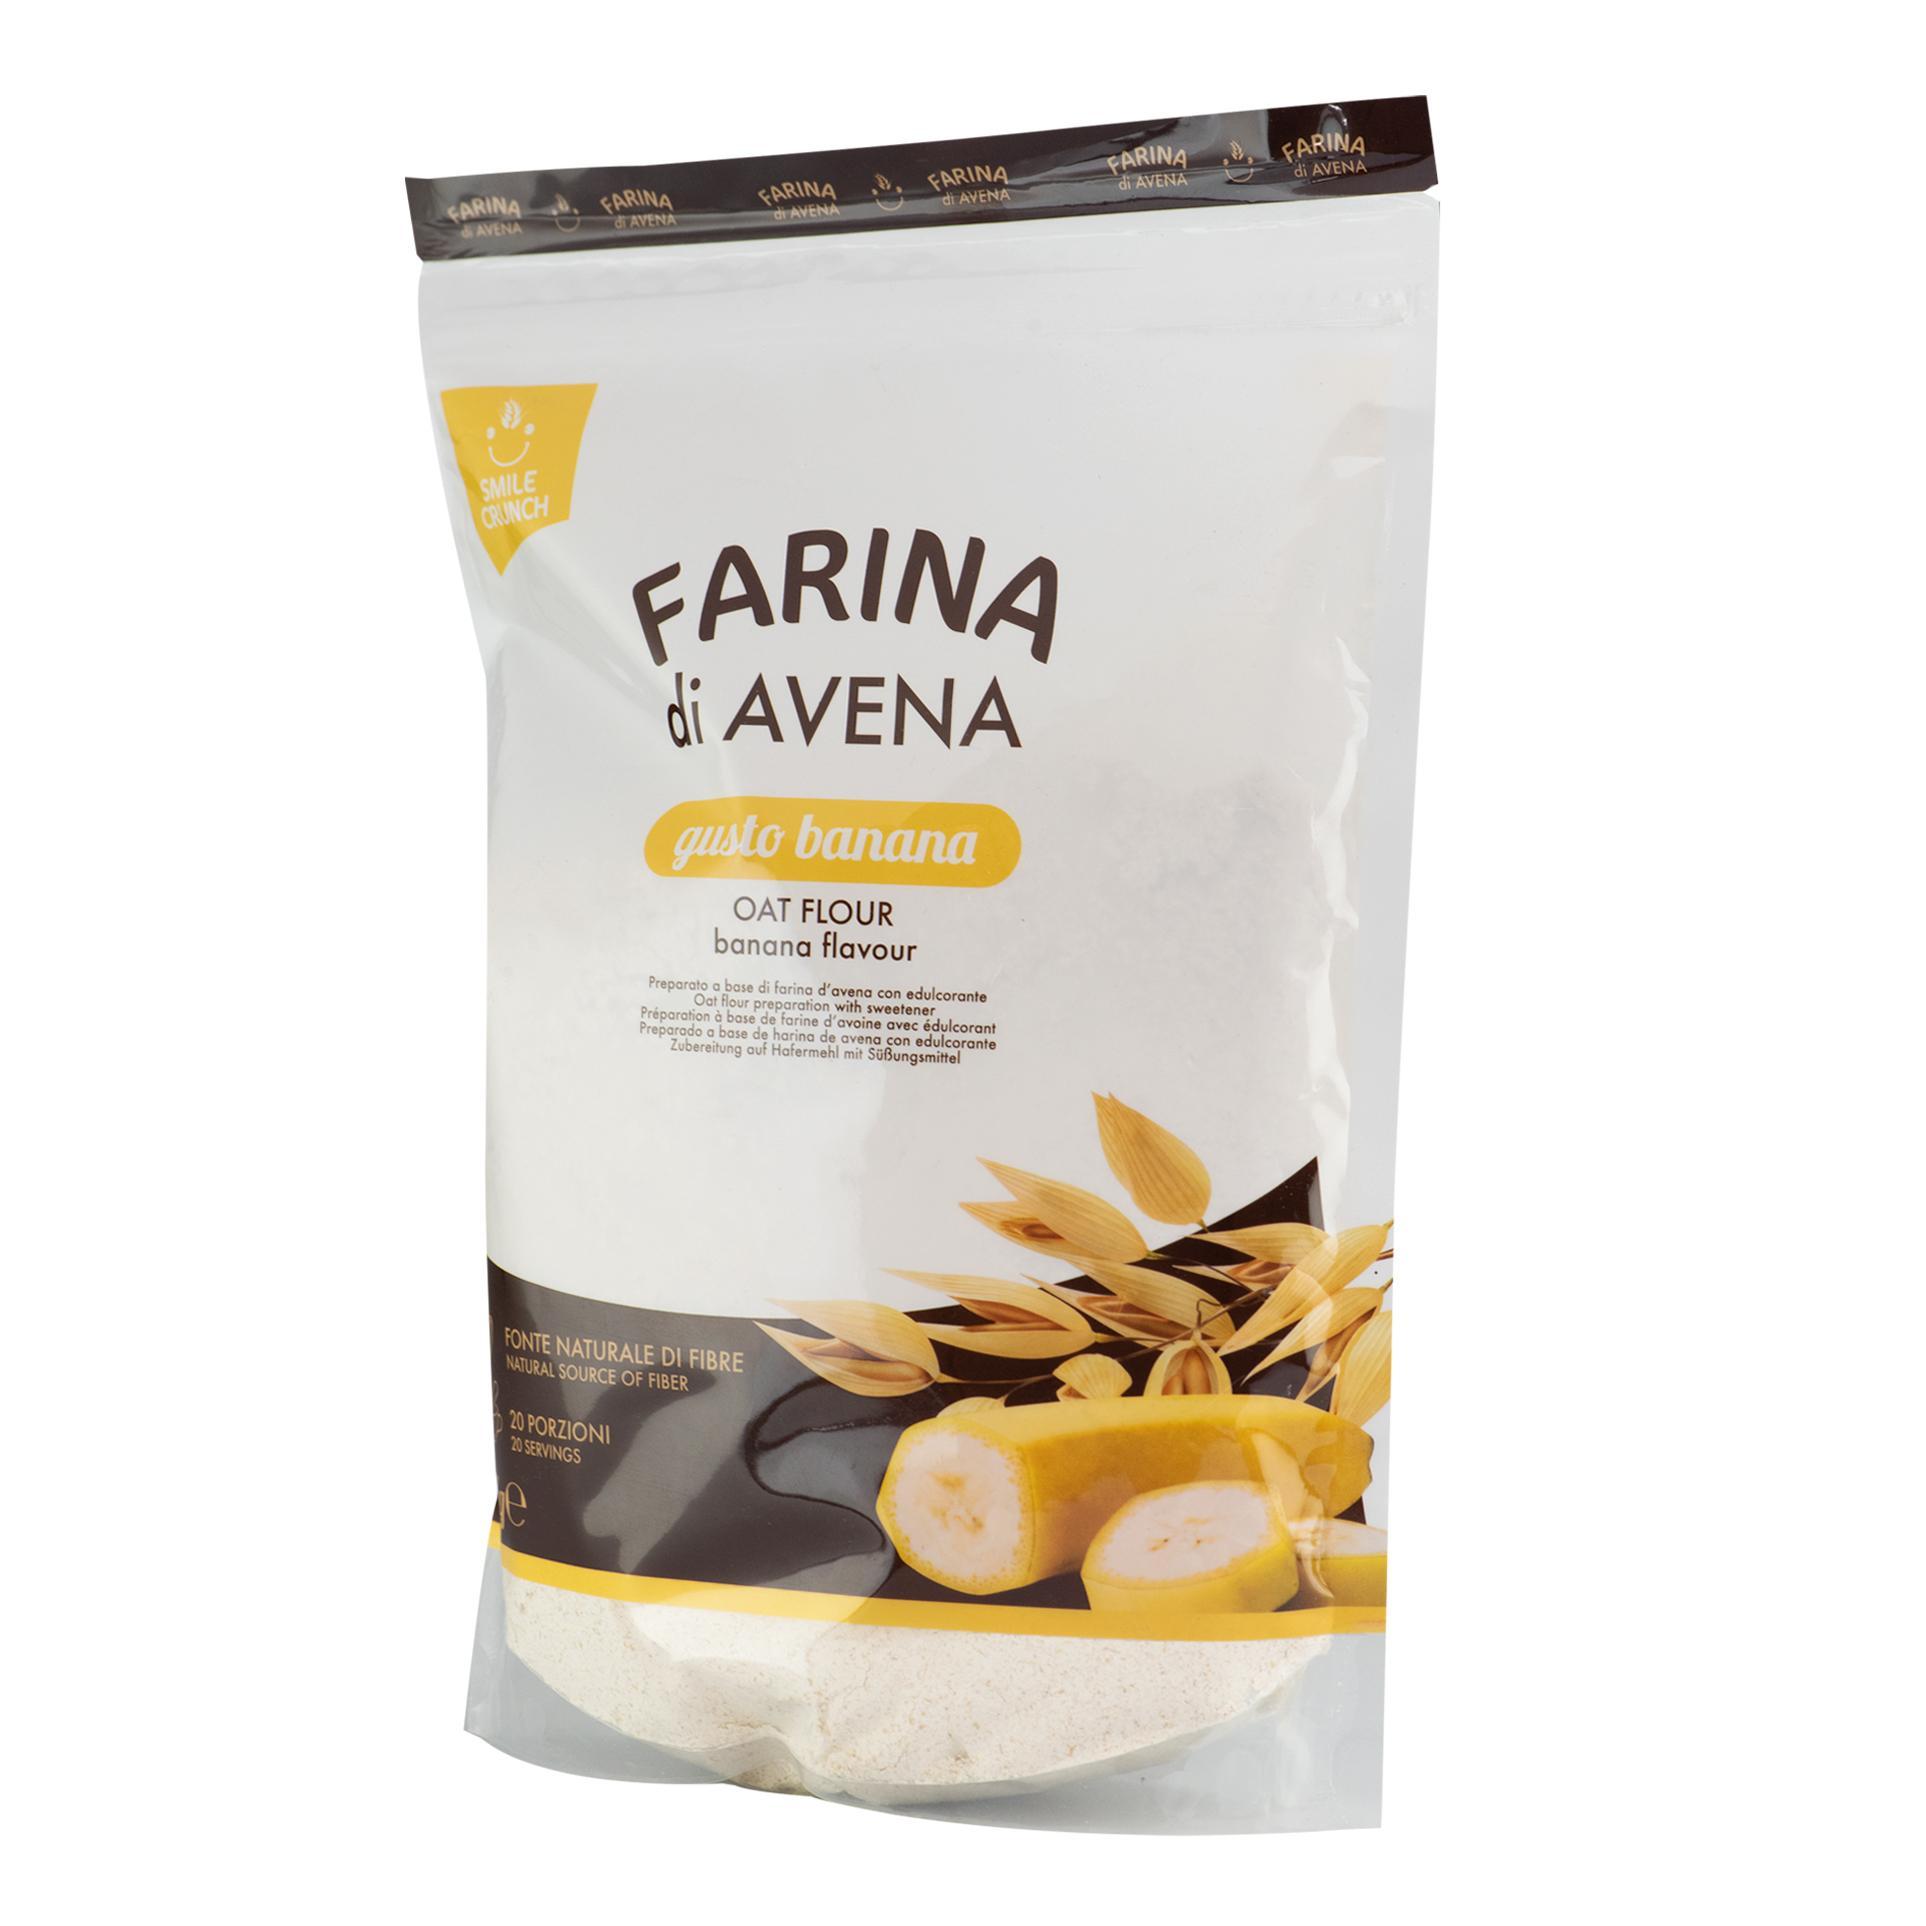 smile crunch oat flour - farina d'avena istantanea gusto banana - 1kg